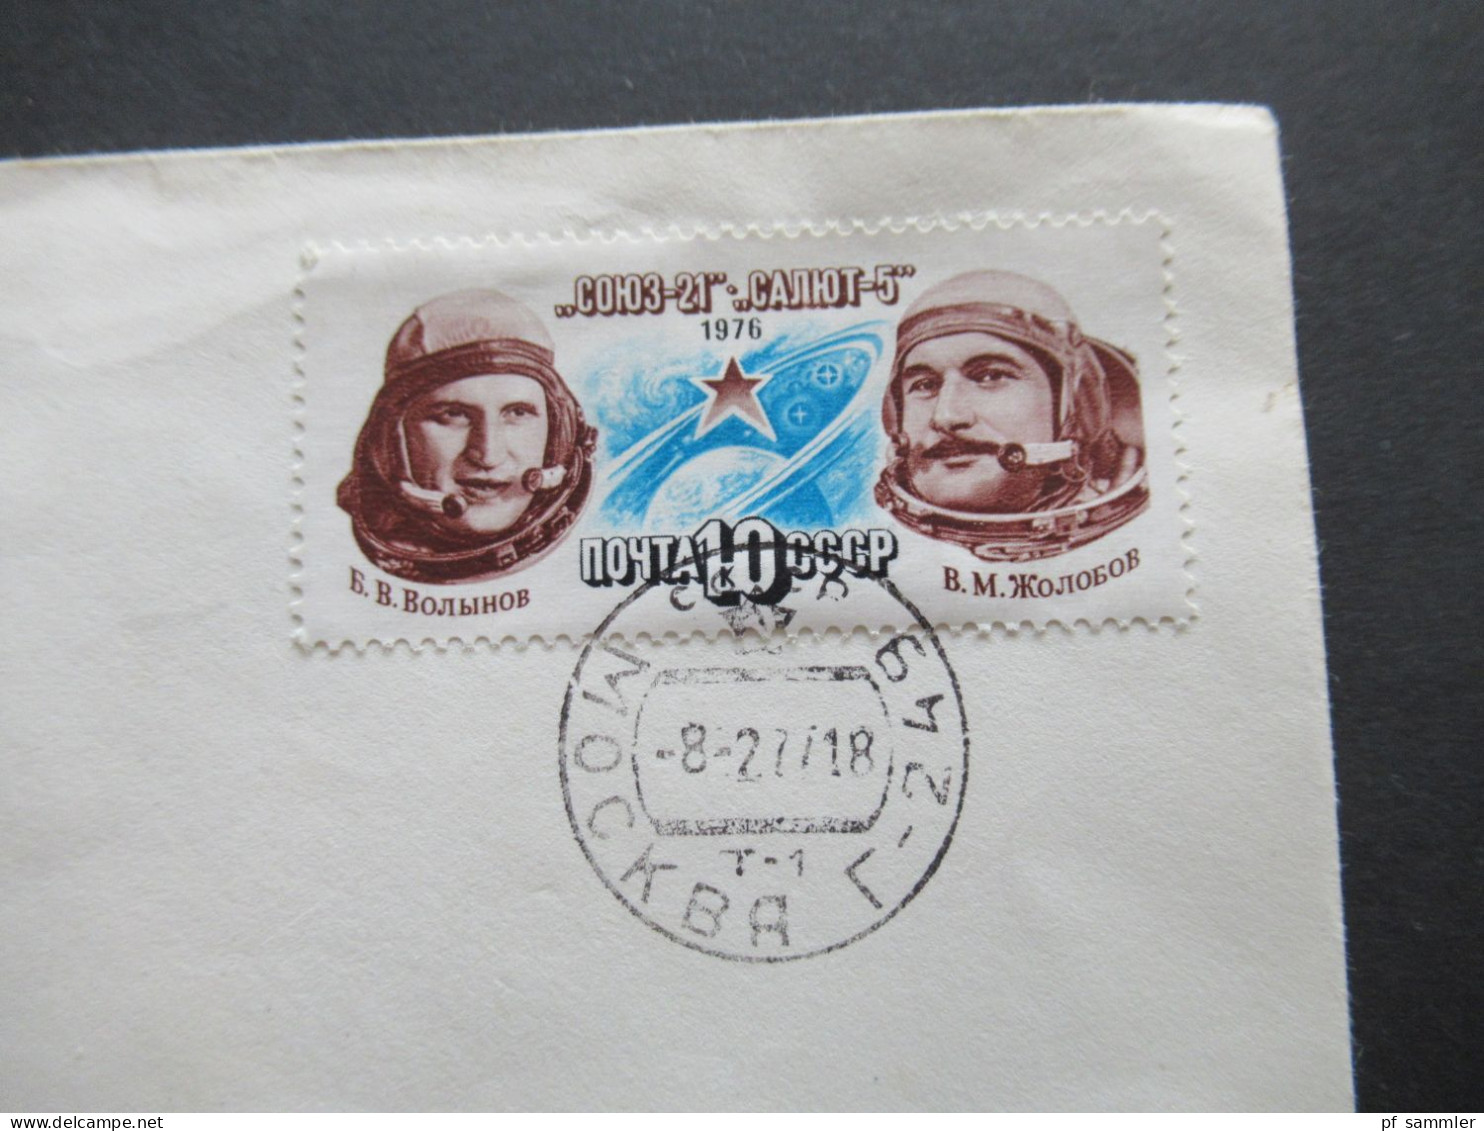 UdSSR 1976 Interkosmos Autogramm / Original Unterschrift / Kosmonaut ??!! Beleg / FDC - Storia Postale